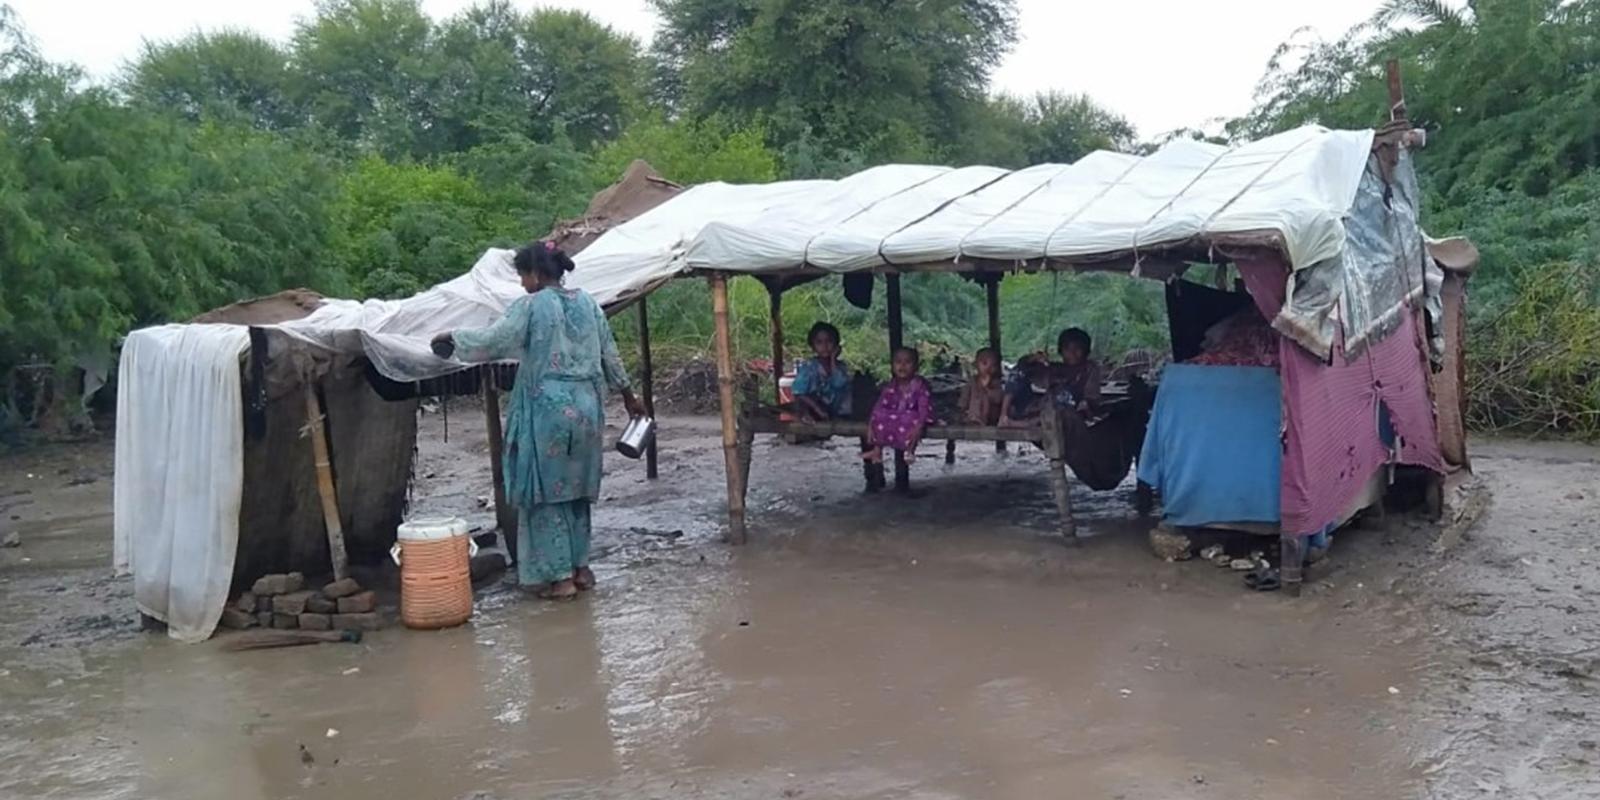 Verheerende Flutkatastrophe in Pakistan löst humanitäre Krise aus